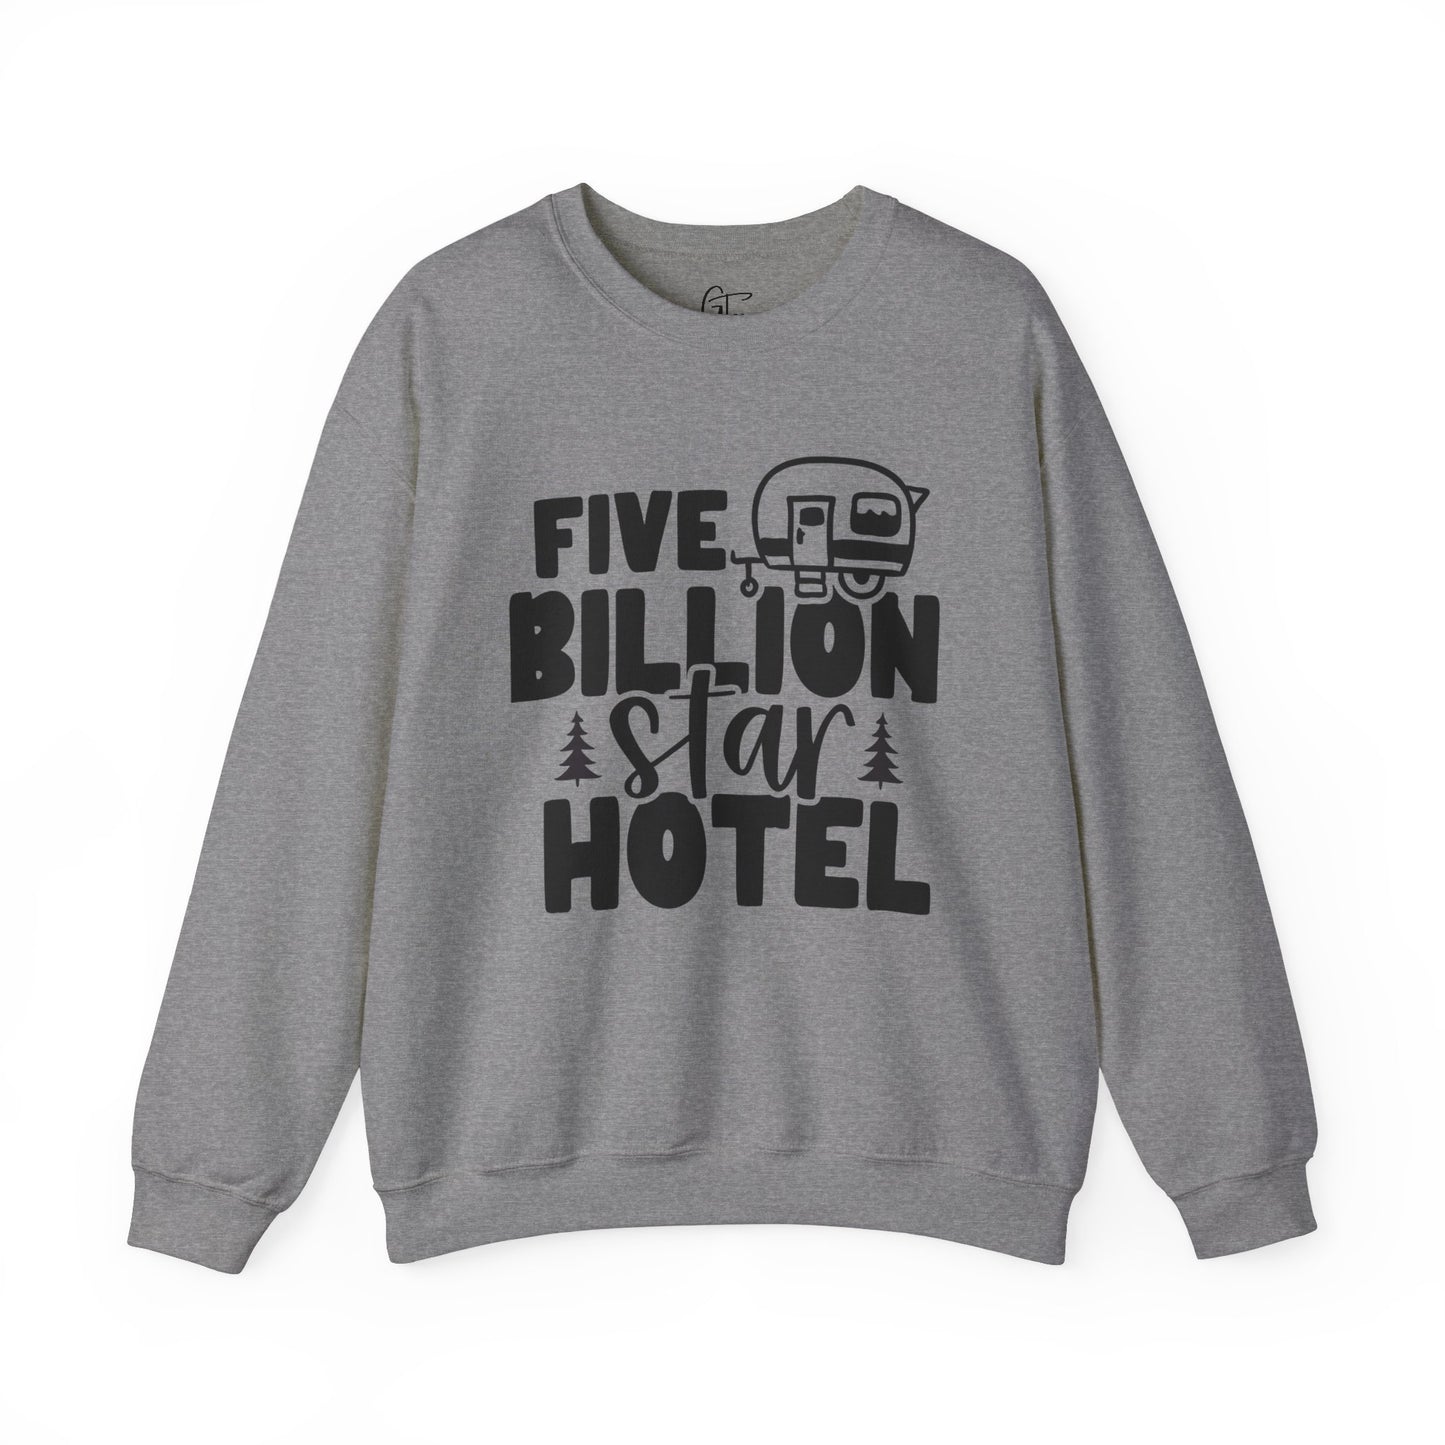 Five Billion Star Hotel Sweatshirt